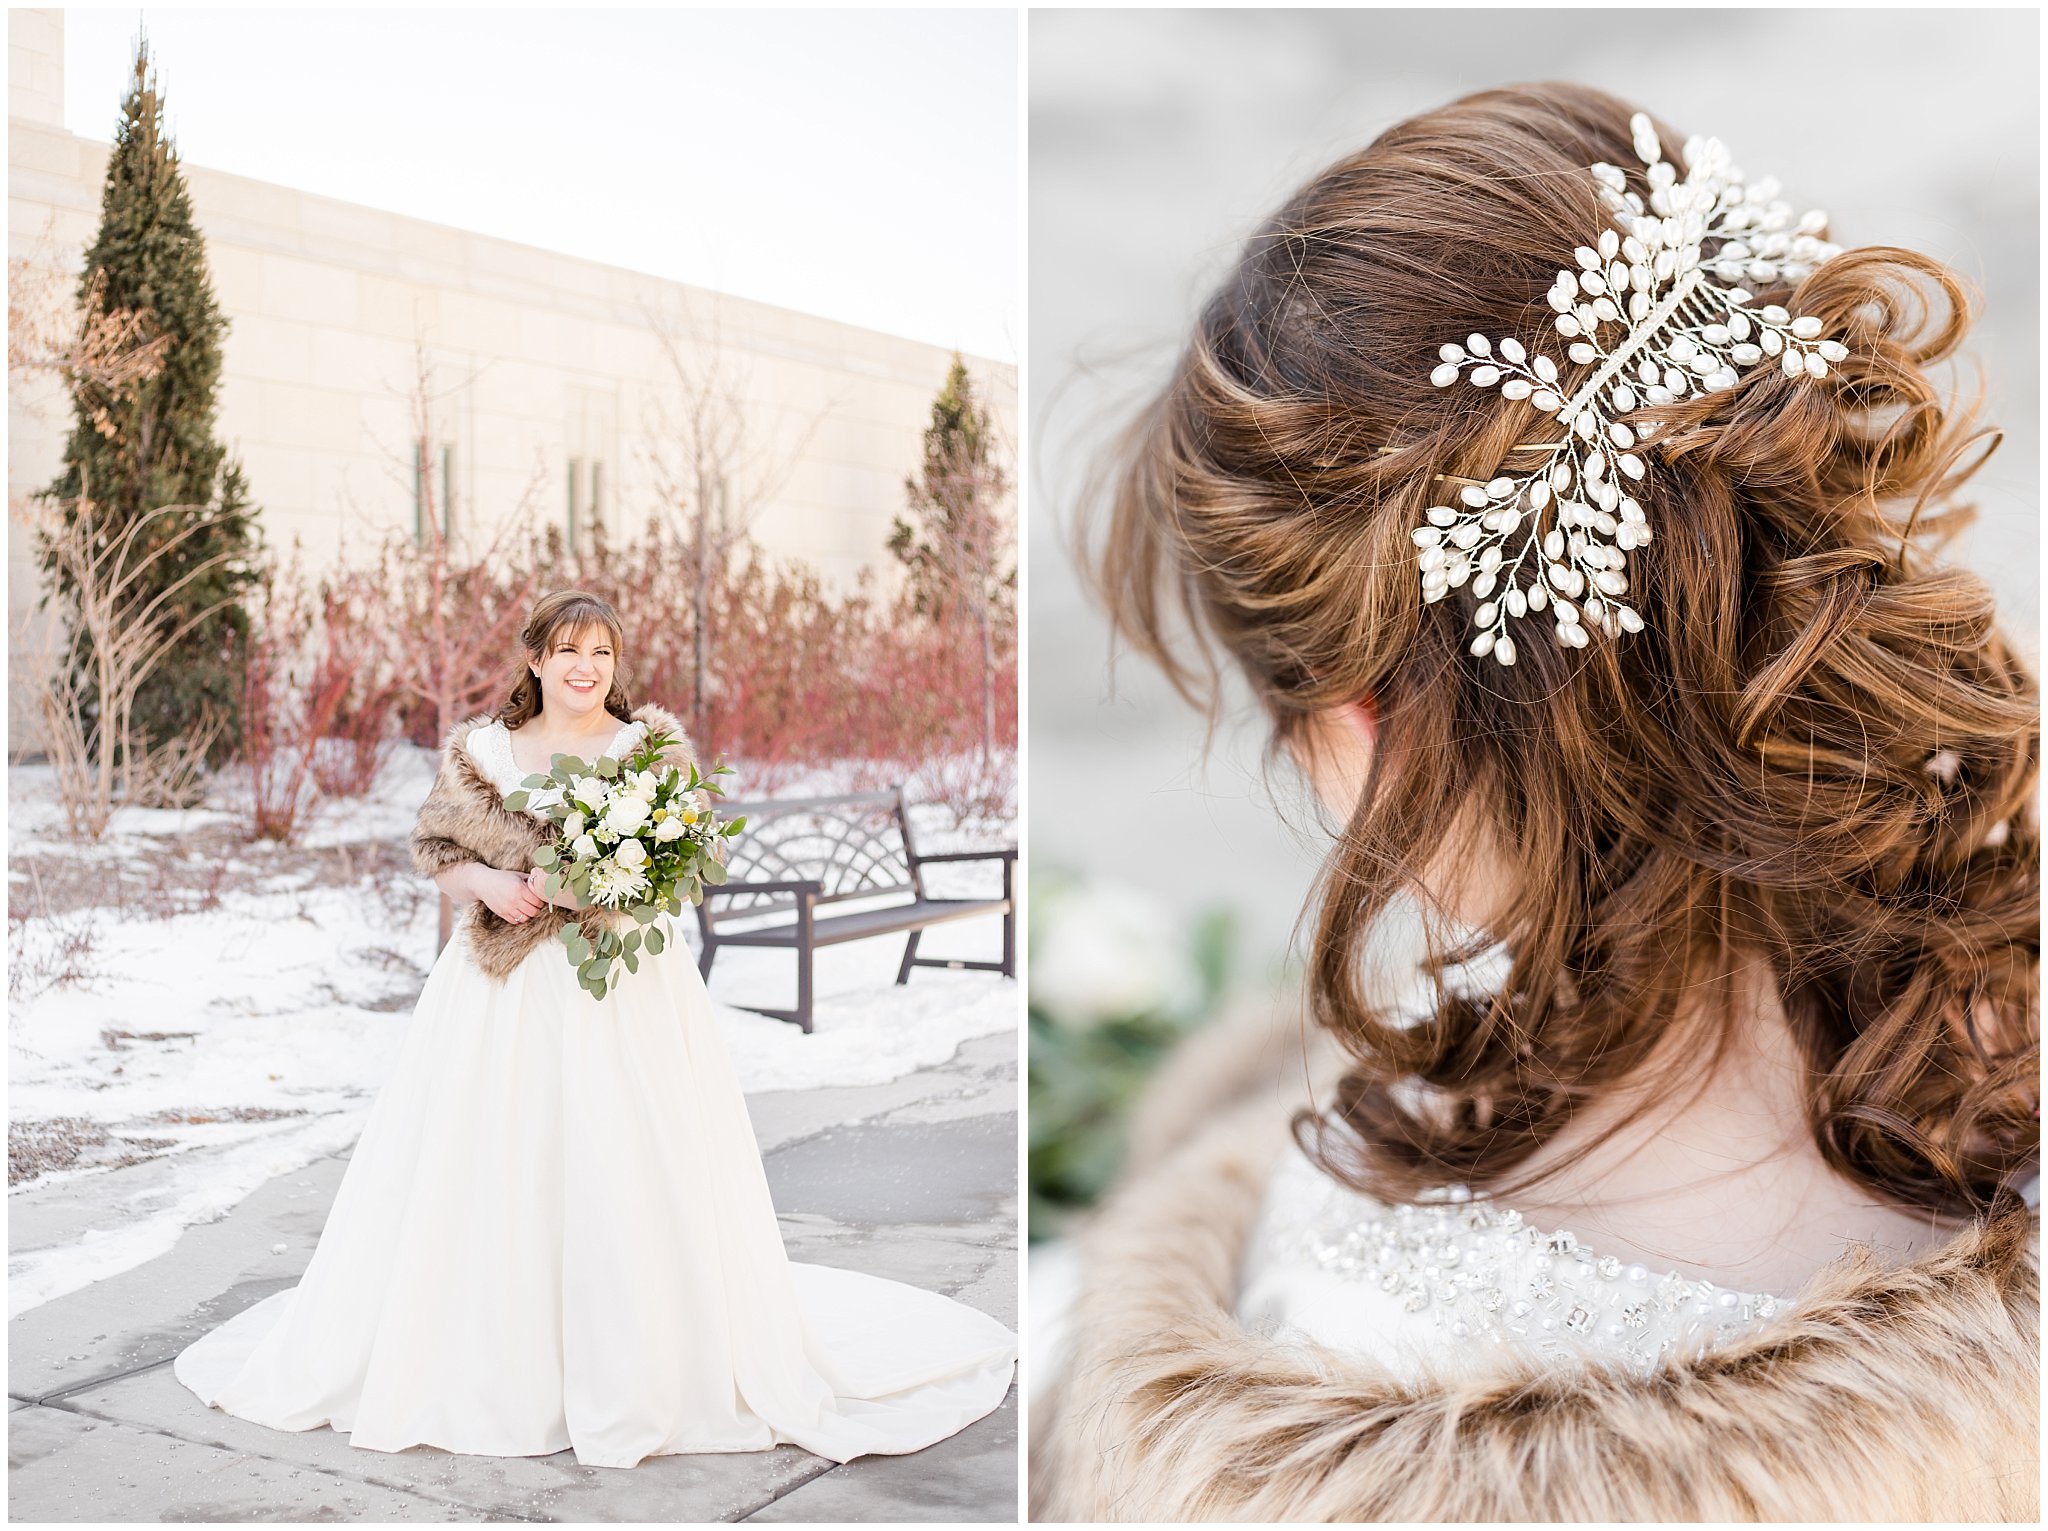 Bridal portrait and bride hair details | Ogden Temple Wedding | Jessie and Dallin Photography